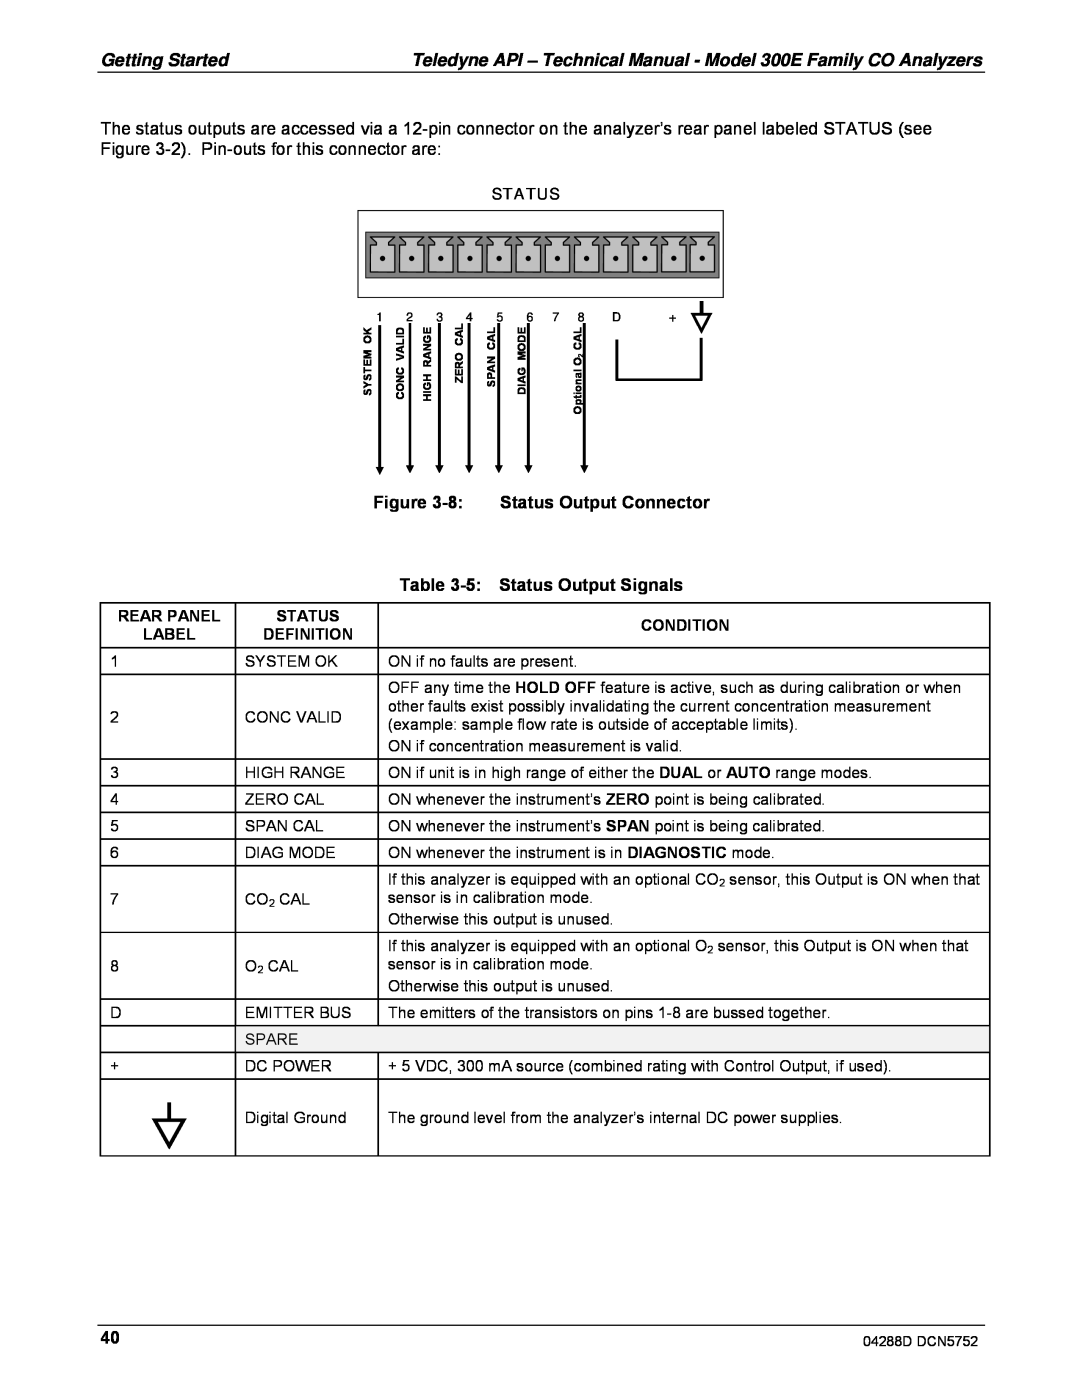 Teledyne M300EM 8:Status Output Connector, 5:Status Output Signals, Rear Panel, Label, Definition, Condition 